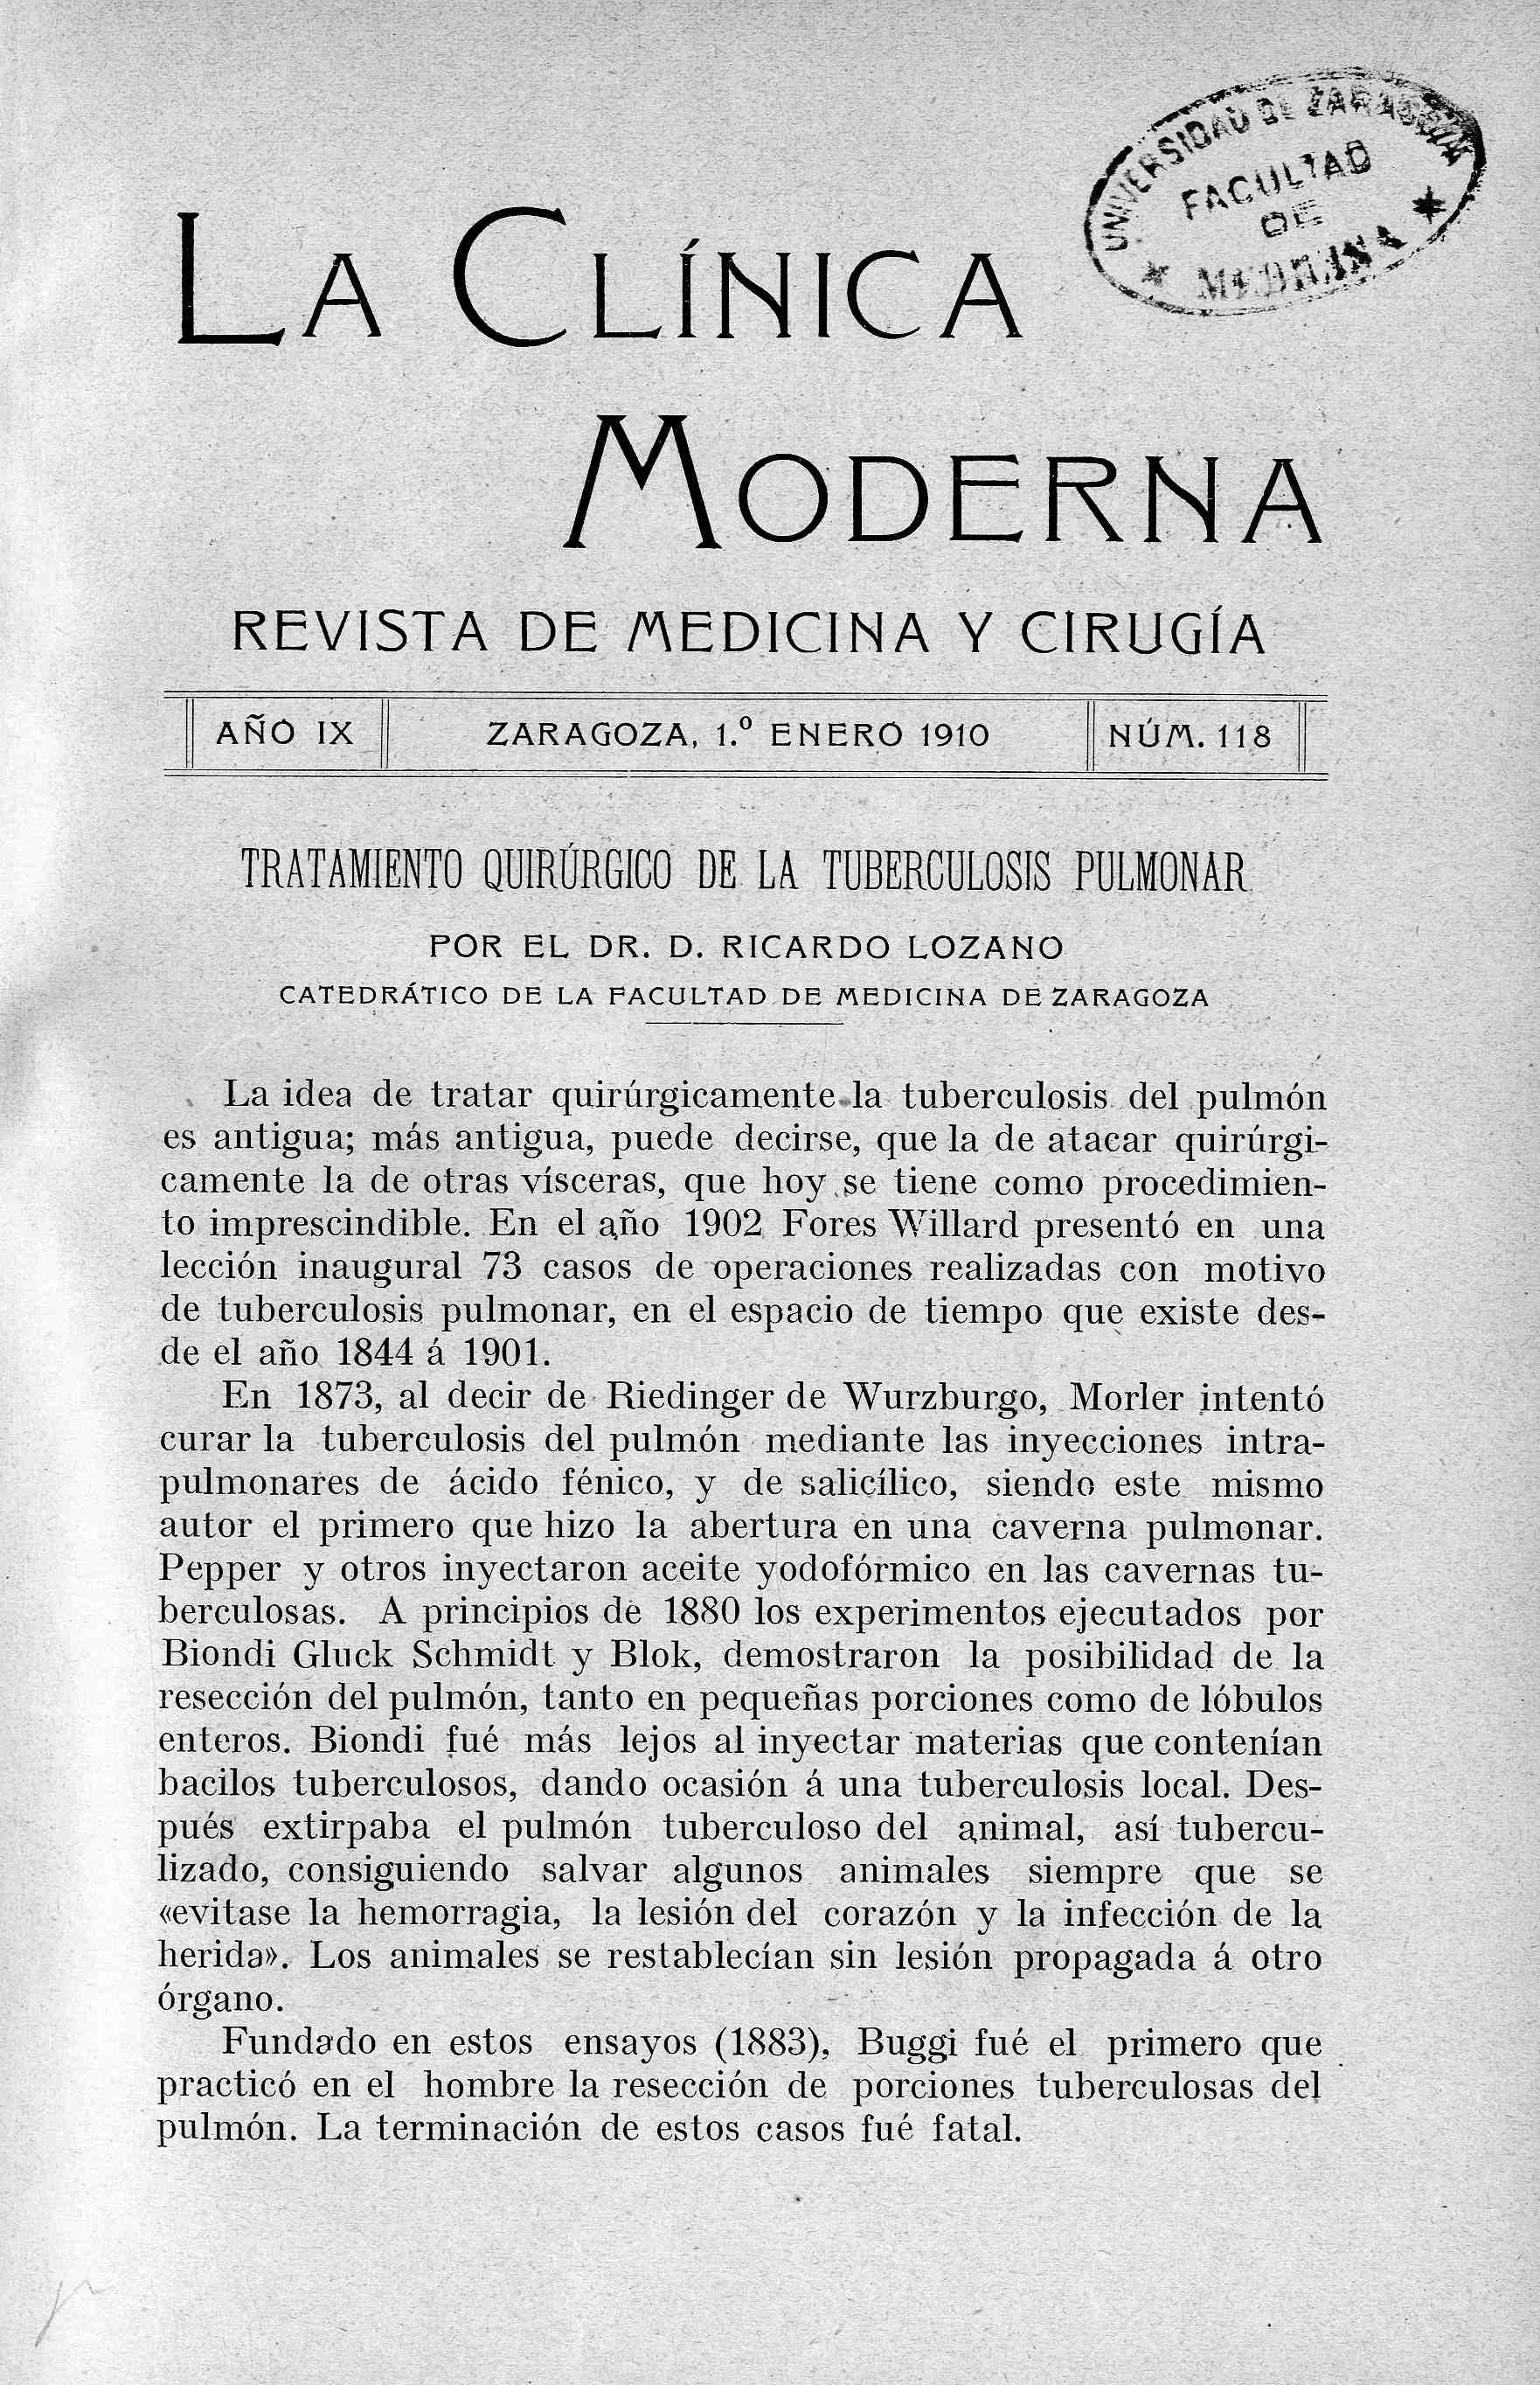 La Clínica Moderna, IX (1910)